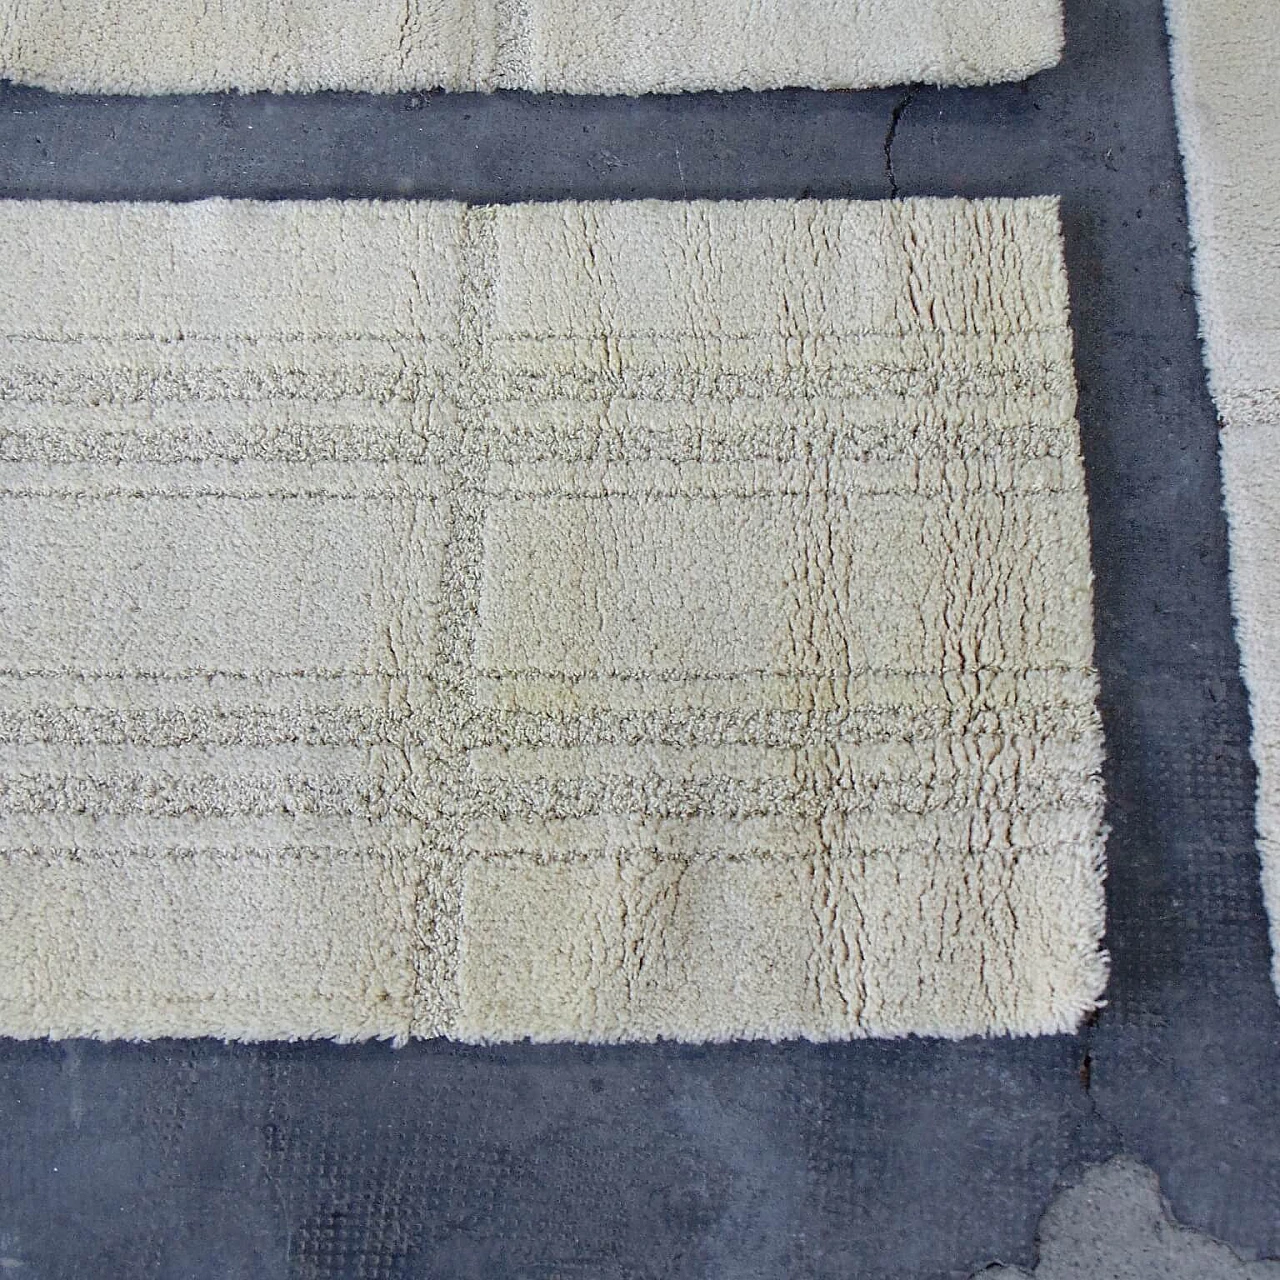 3 Tappeti danesi in pura lana vergine, tonalità crema, Eksport Hojer, anni '70 1069203